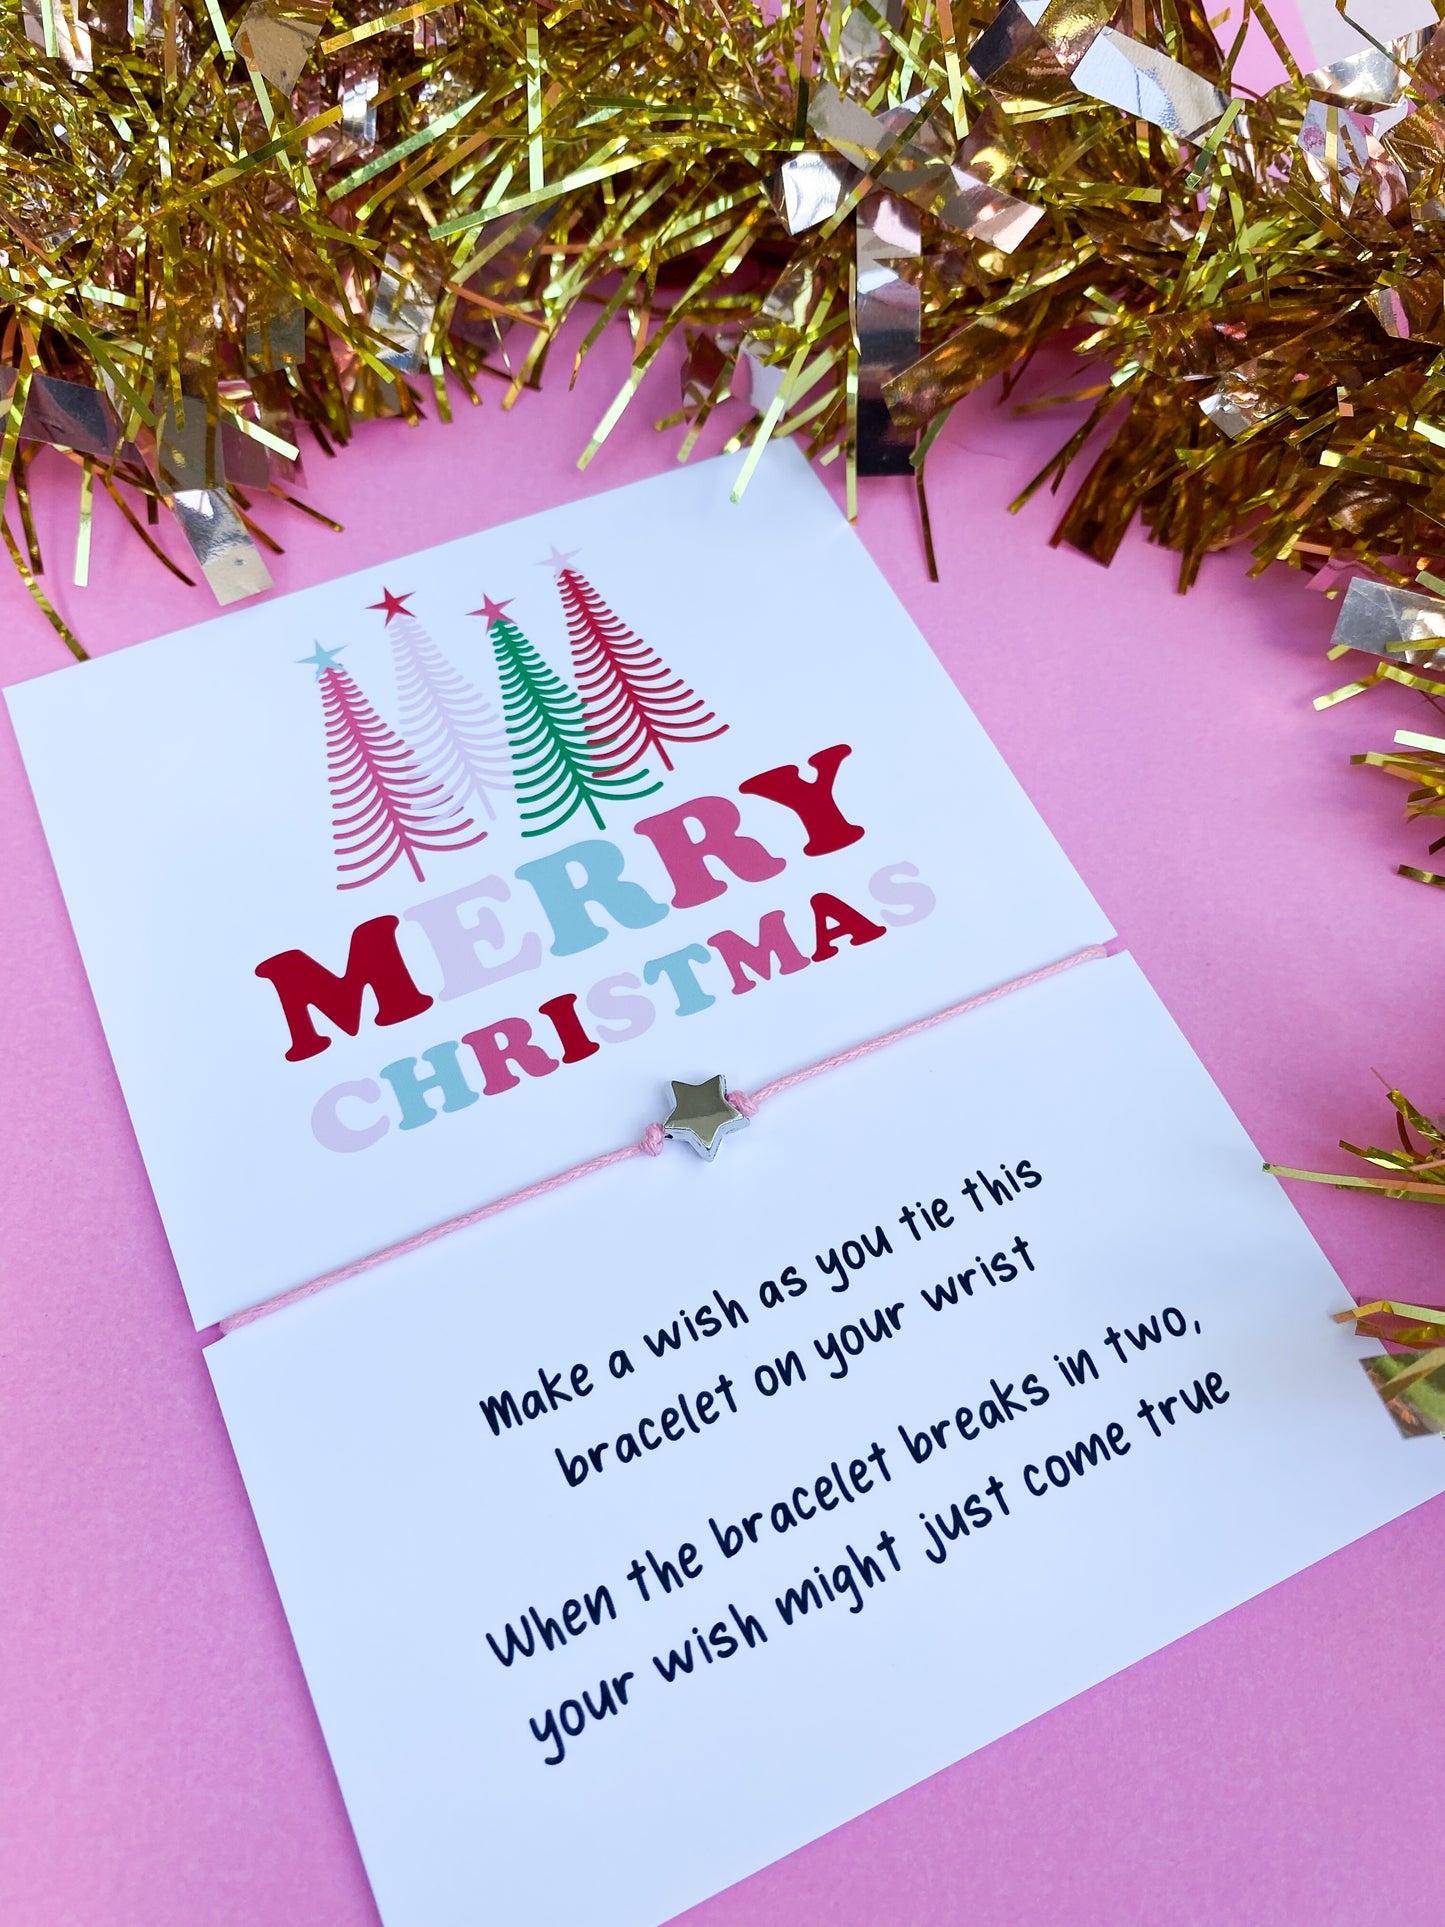 Merry Christmas Tree Wish Bracelet